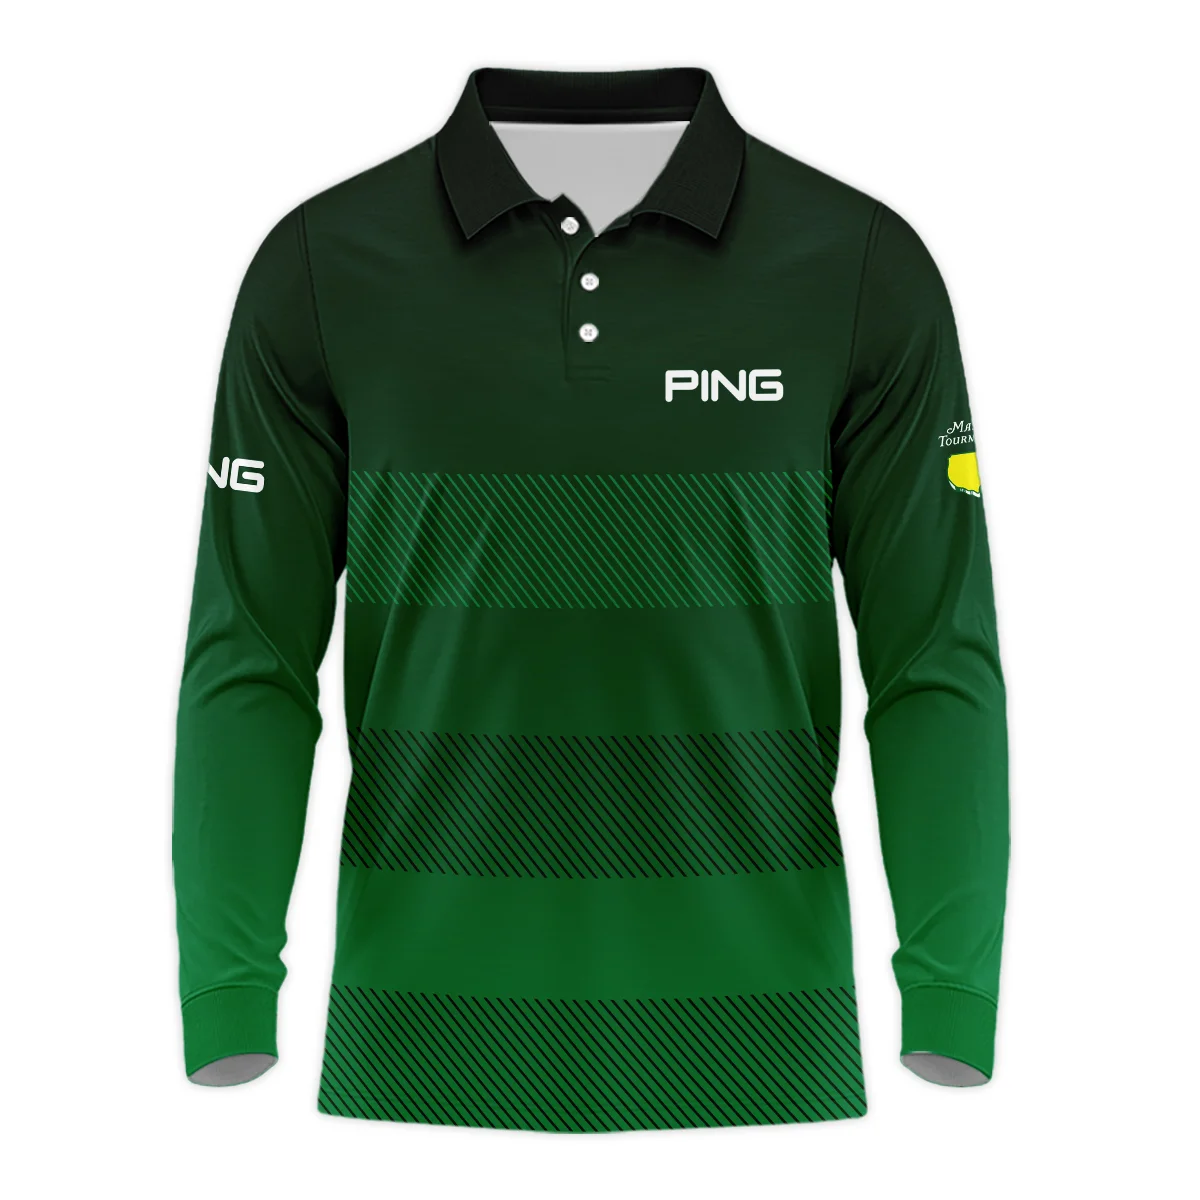 Masters Tournament Ping Sports Zipper Polo Shirt Green Gradient Stripes Pattern All Over Print Zipper Polo Shirt For Men